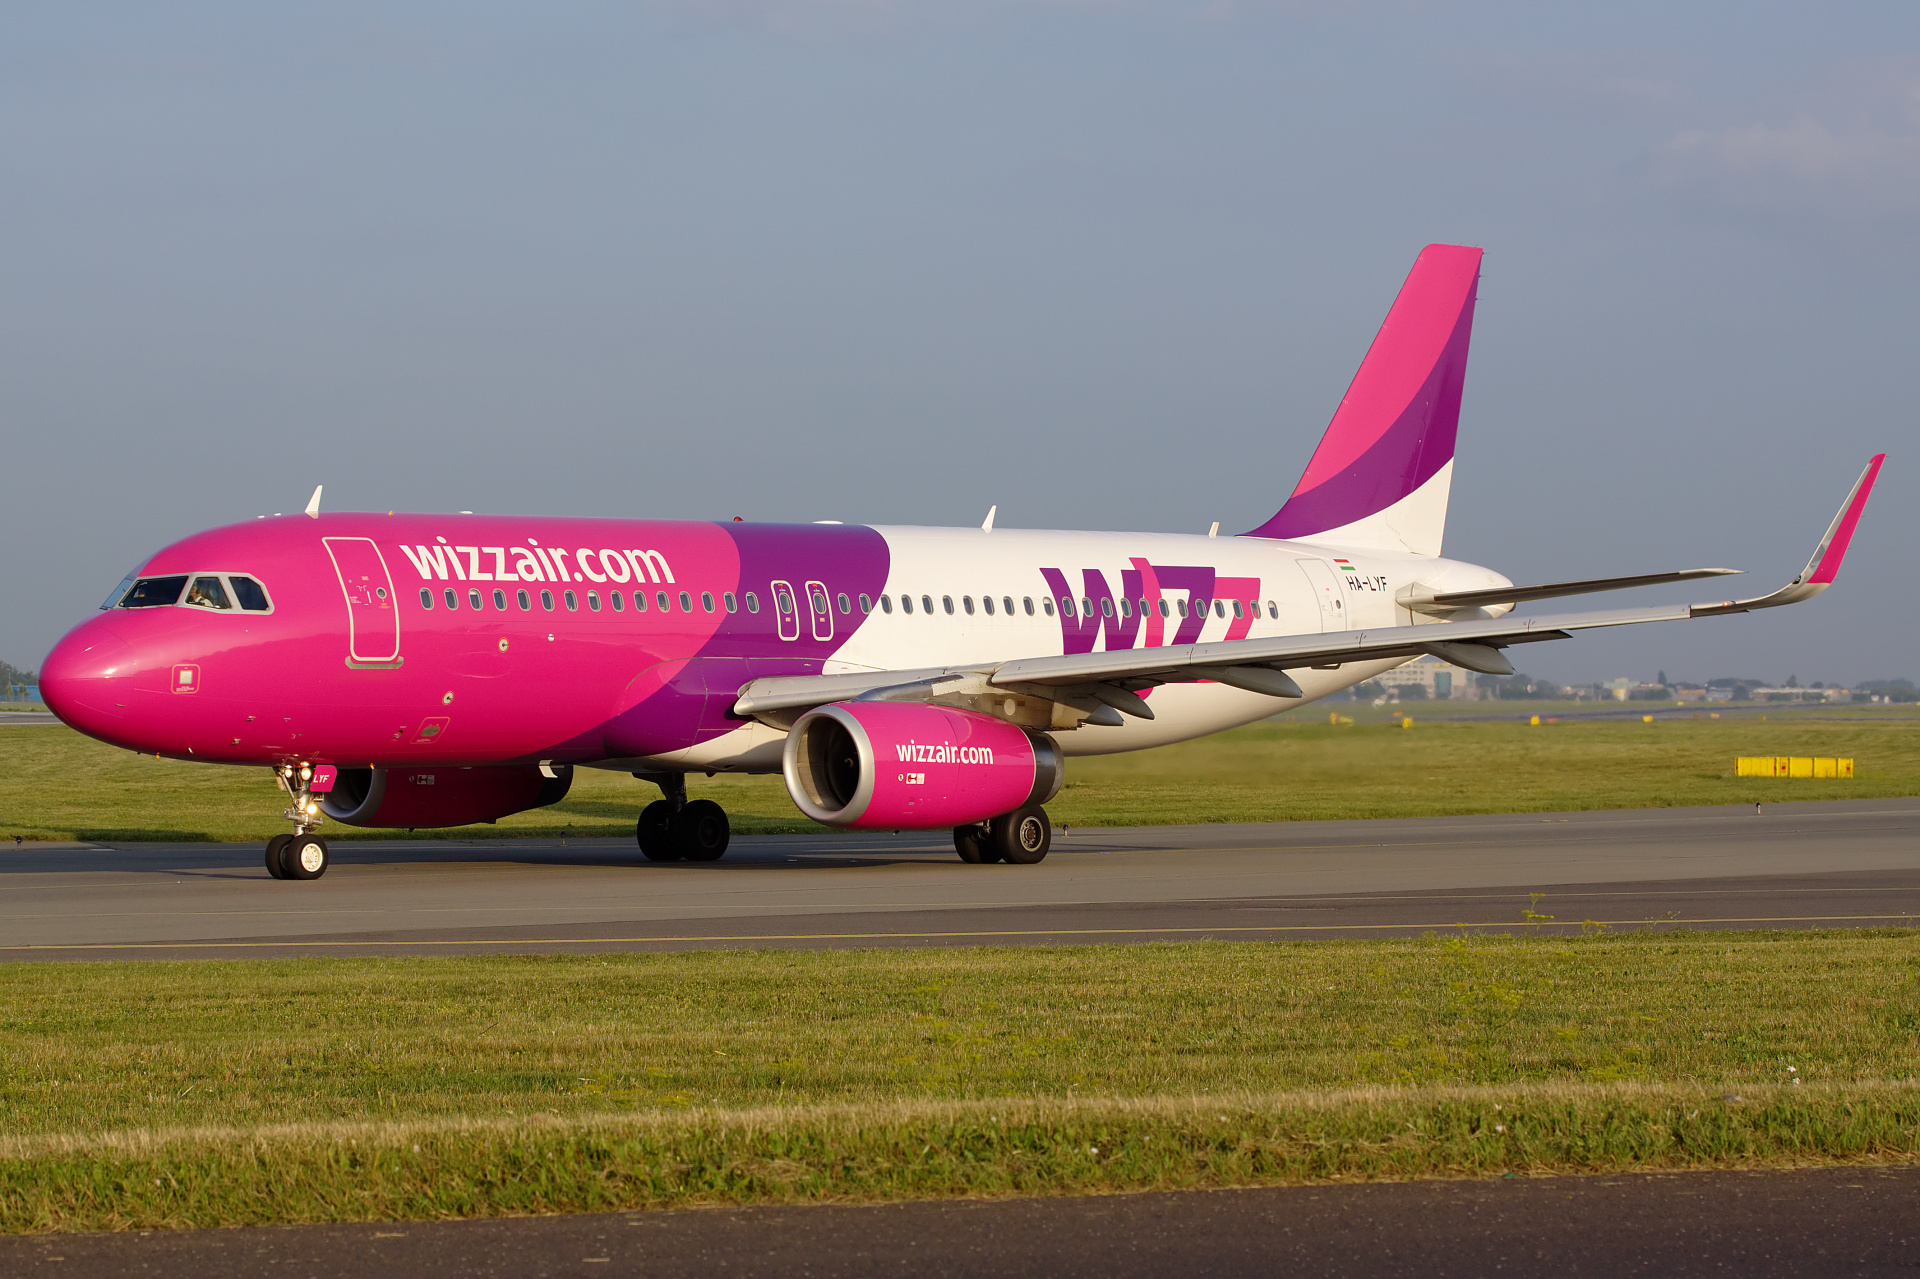 HA-LYF (Aircraft » EPWA Spotting » Airbus A320-200 » Wizz Air)